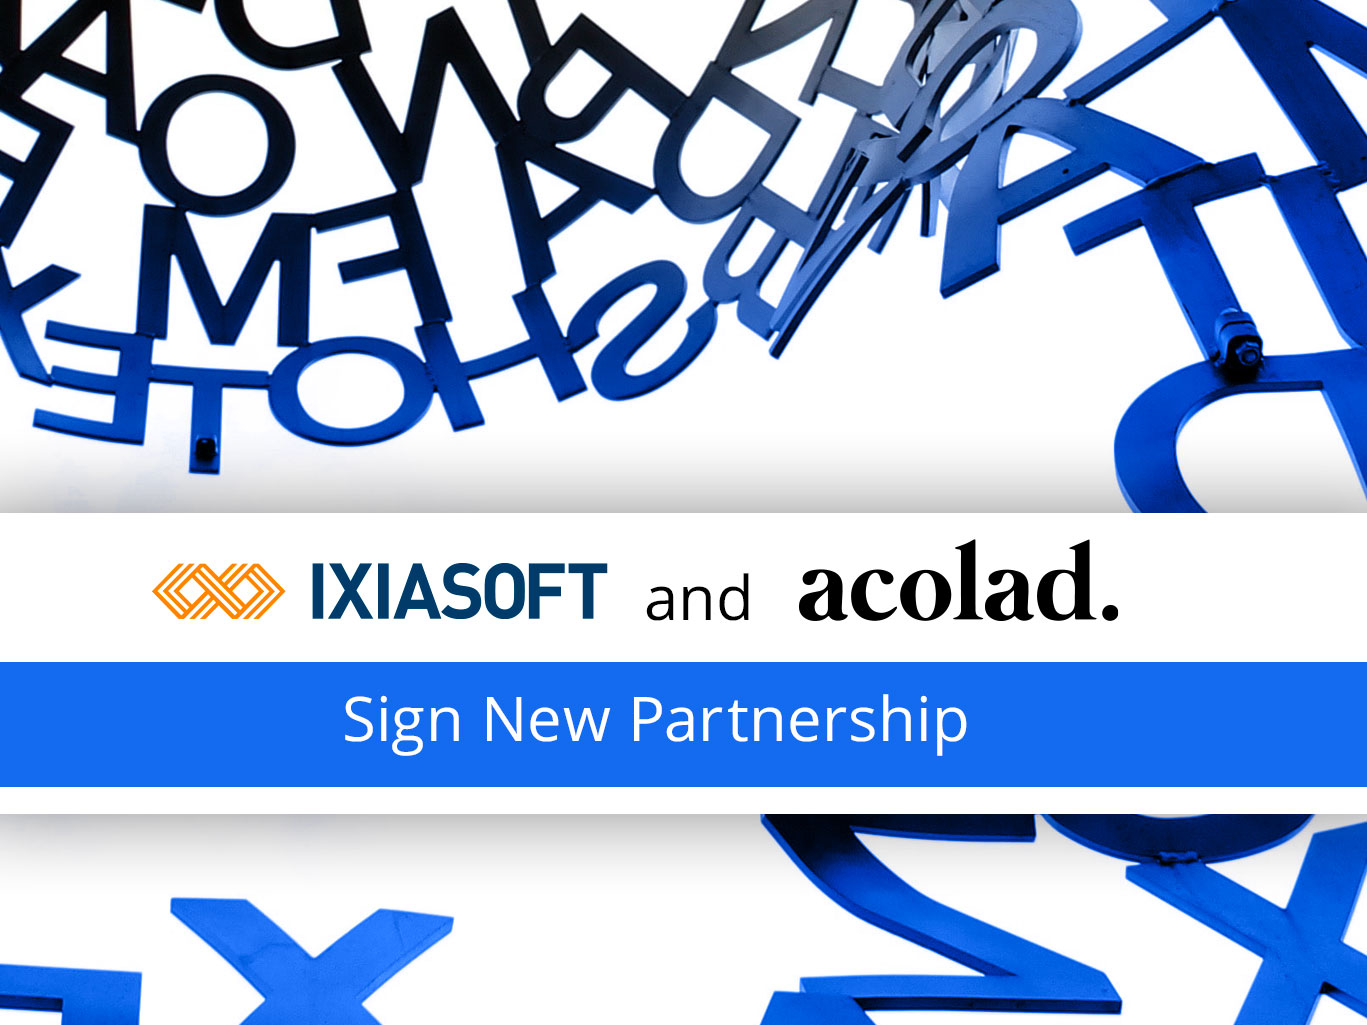 Ixiasoft press release: Ixiasoft and acolad sign new partnership